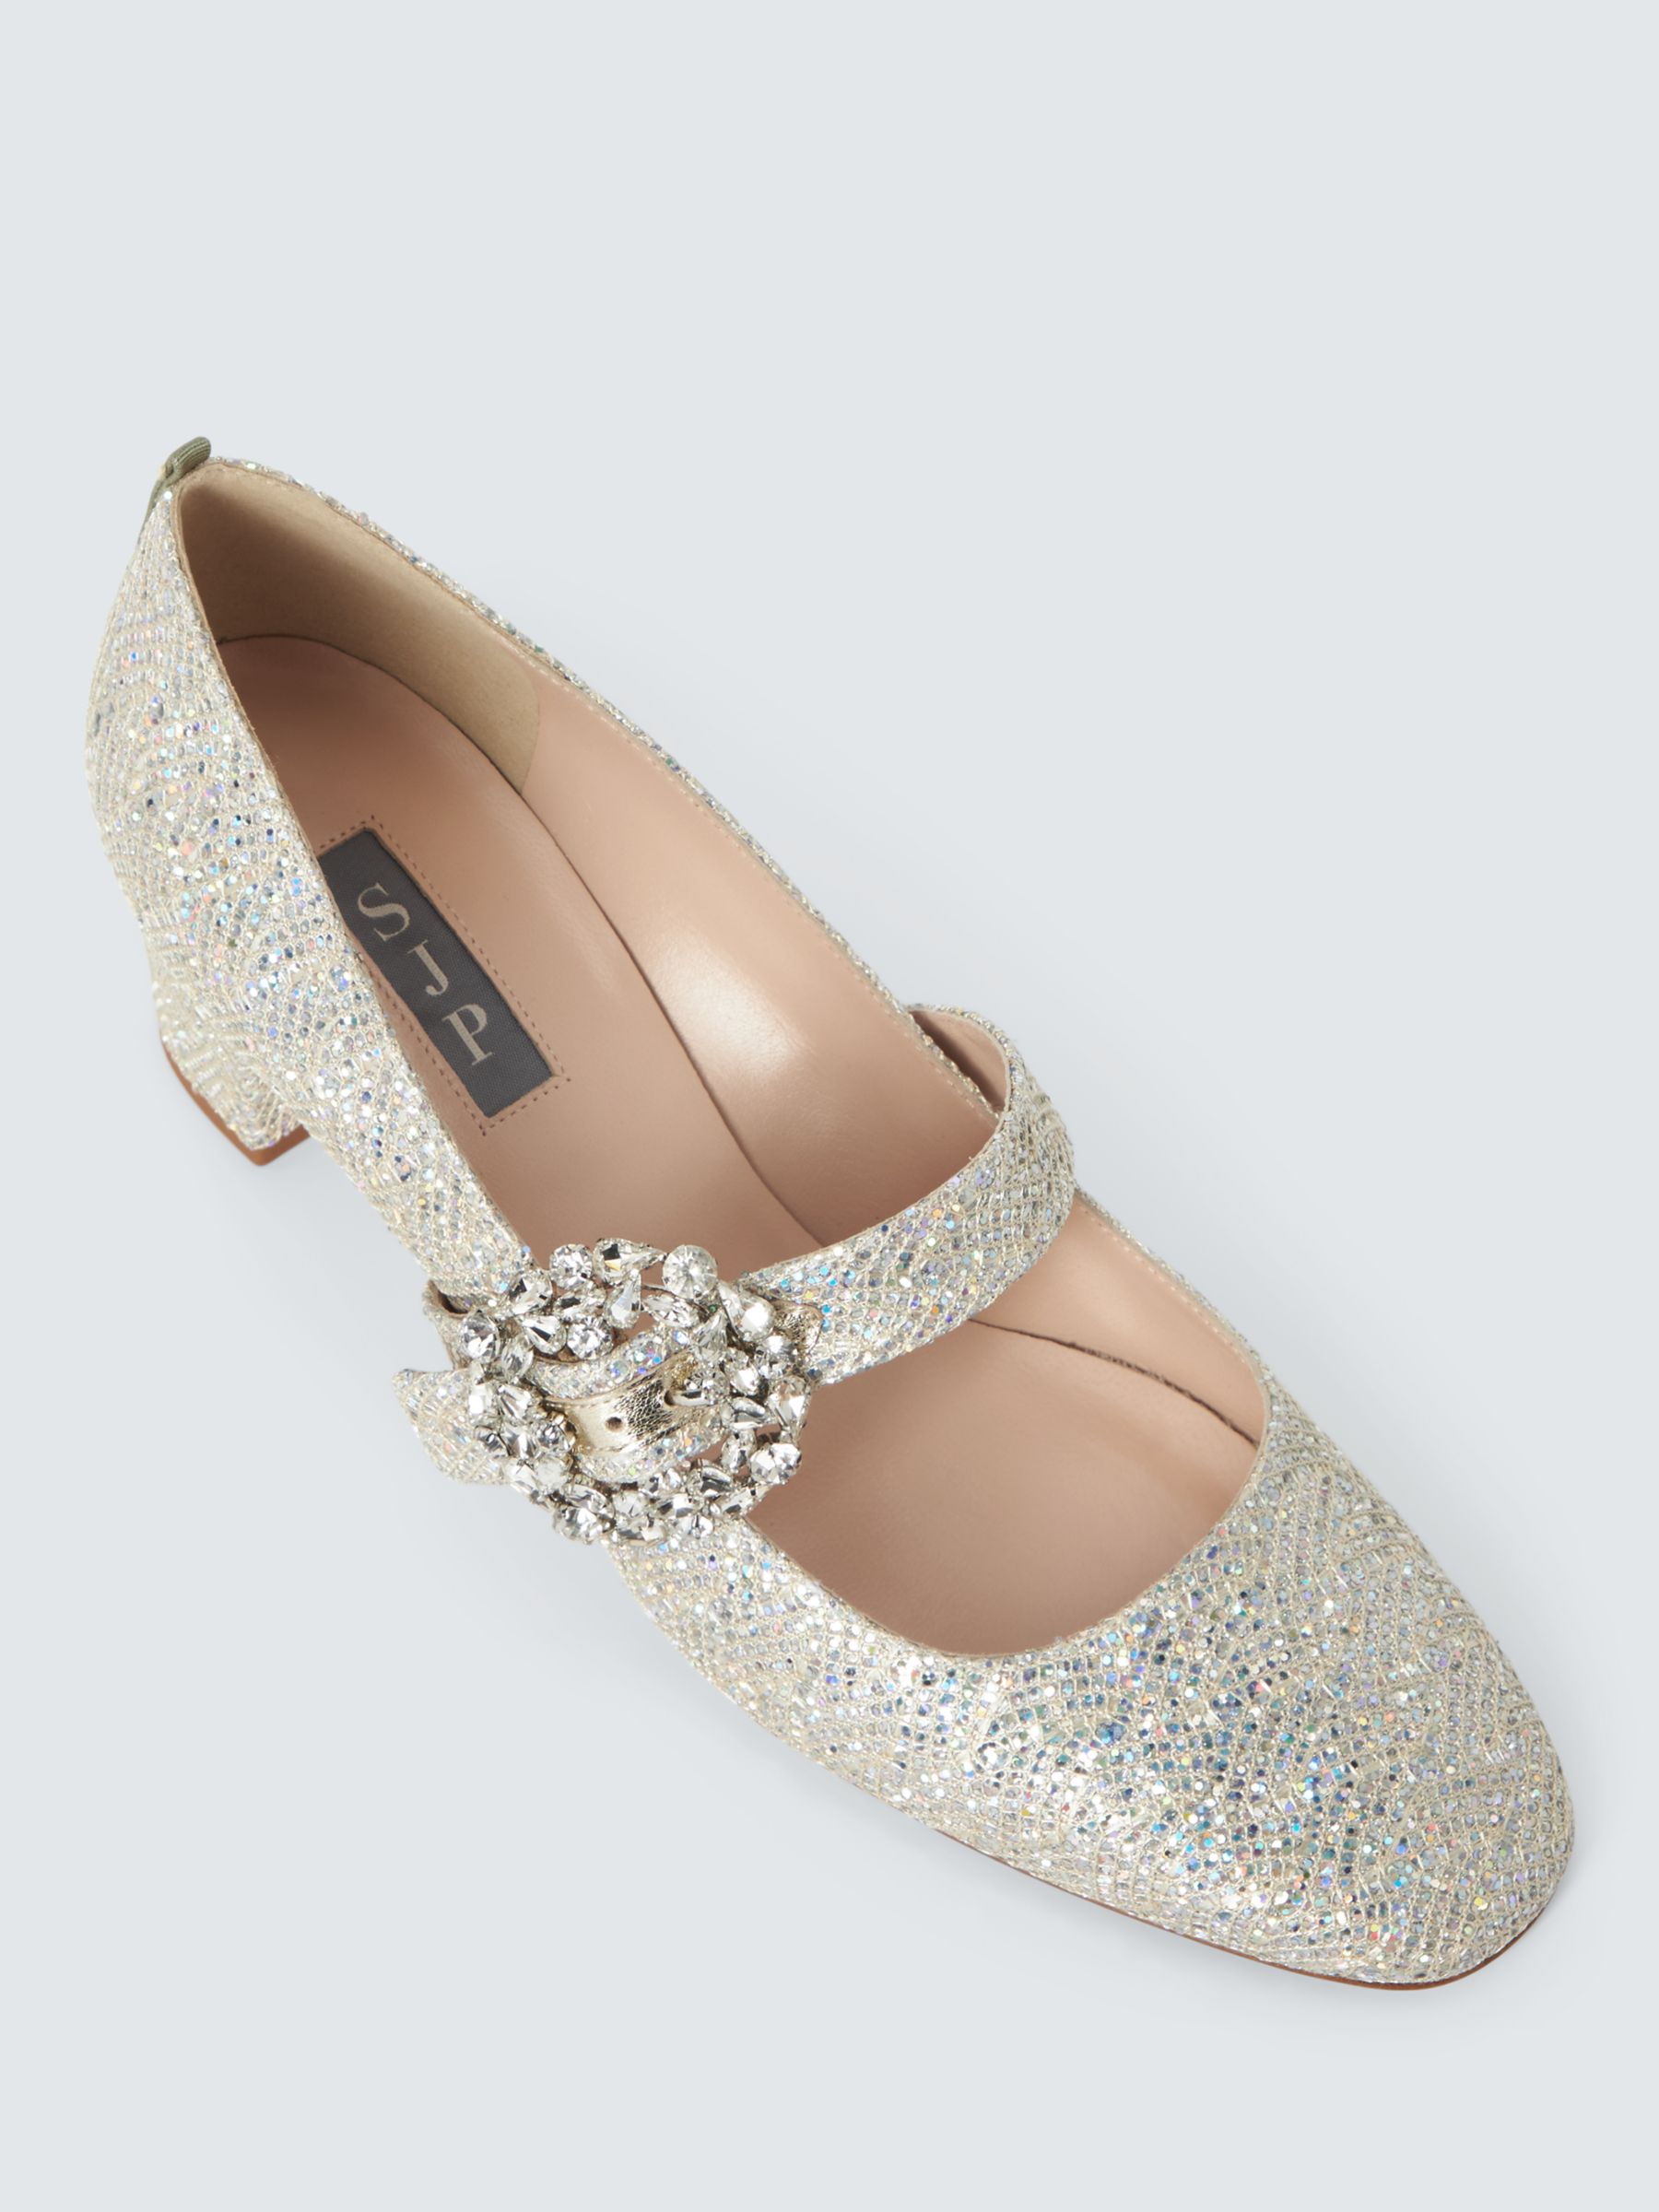 SJP by Sarah Jessica Parker Cosette Mary Jane Court Shoes, Blizzard Glitter, 4.5